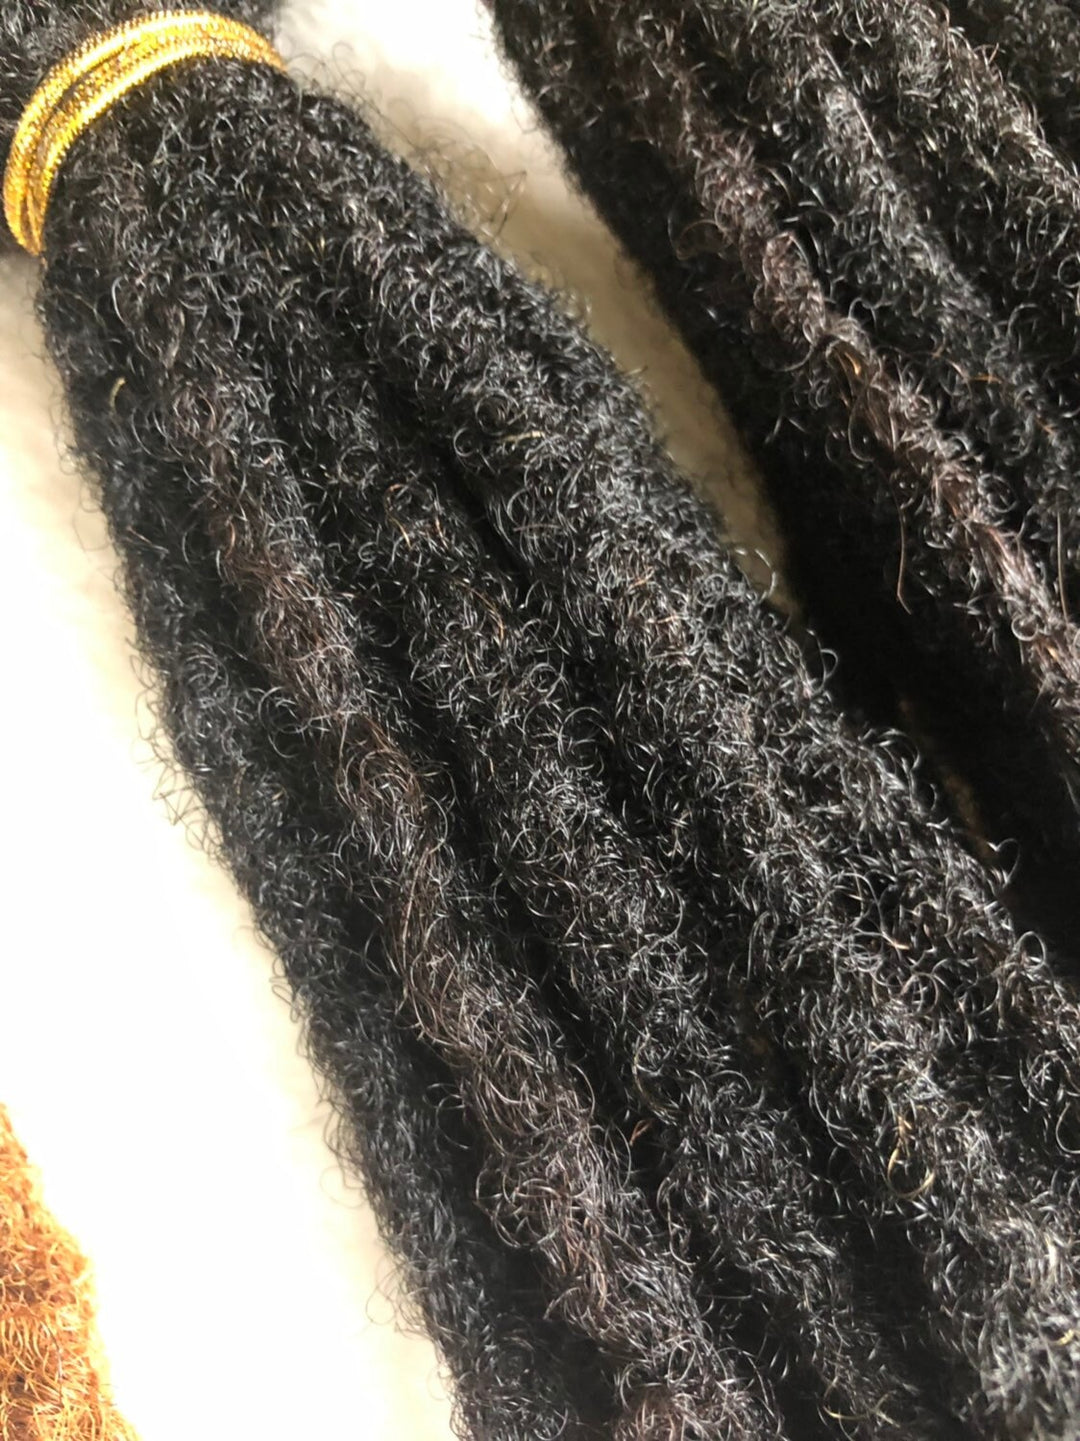 Afro Kinky Human Hair Crochet Dreadlocks Extension Natural Faux